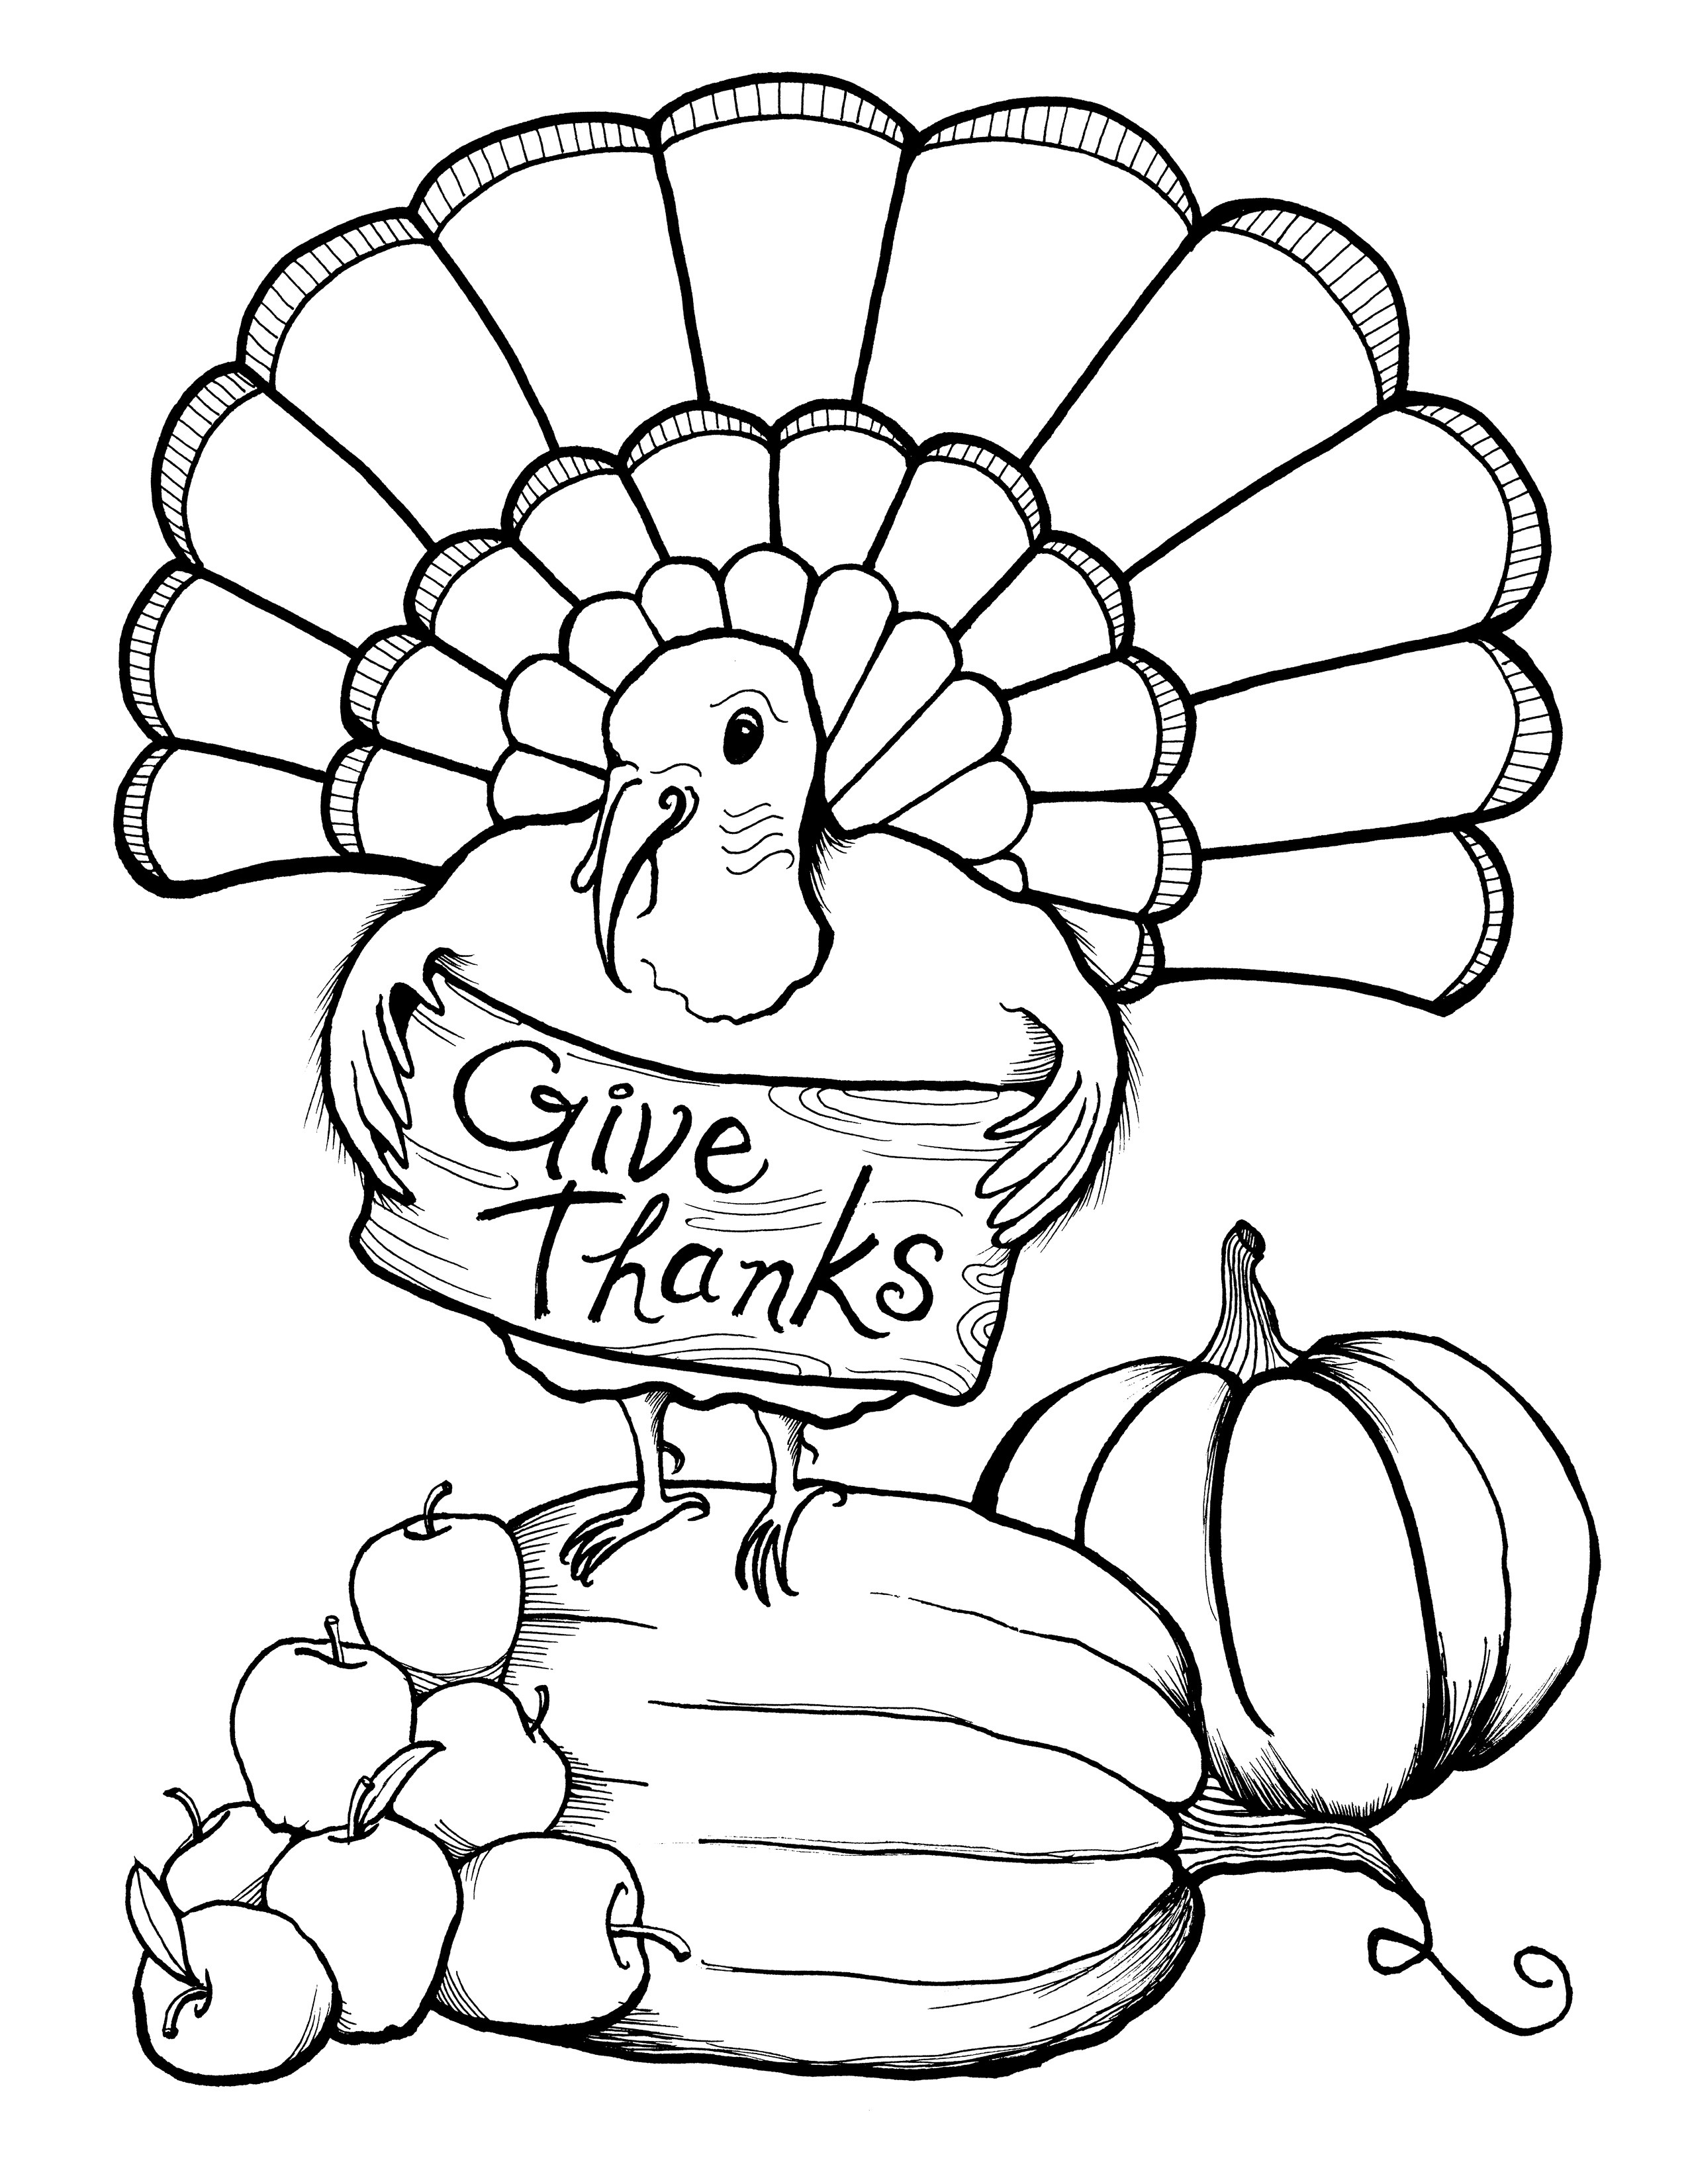 Give Thanks – Novembers